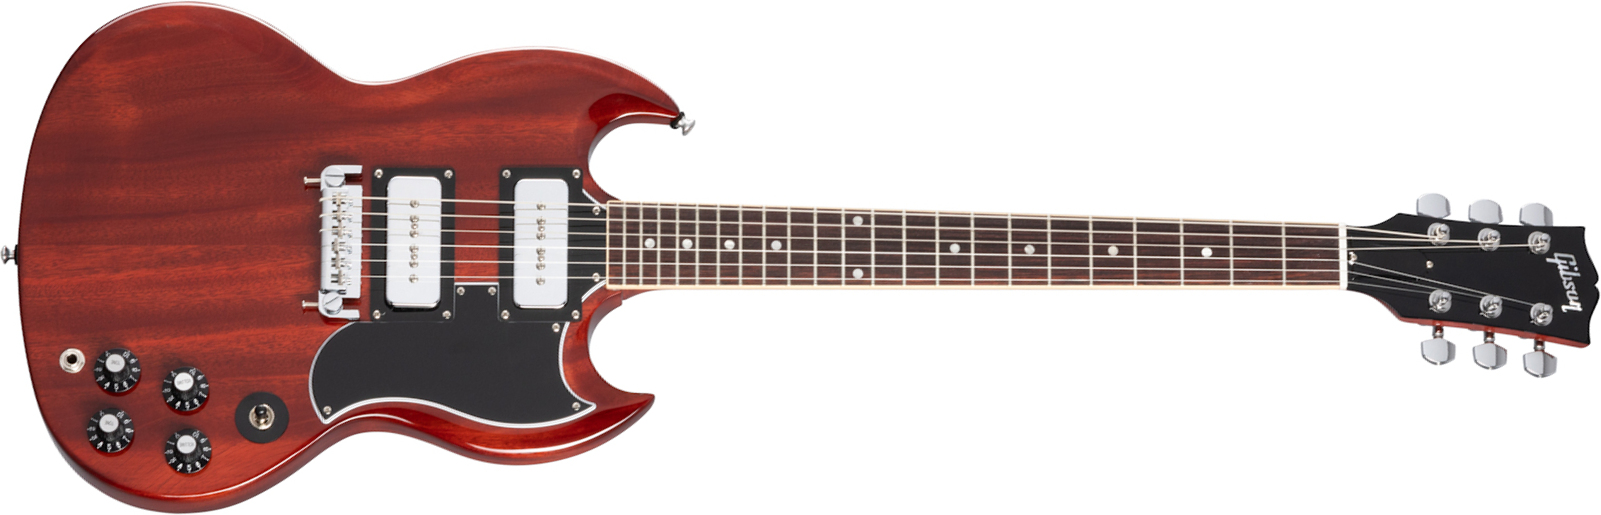 Gibson Tony Iommi Sg Special Signature 2p90 Ht Rw - Cherry - Guitarra electrica retro rock - Main picture